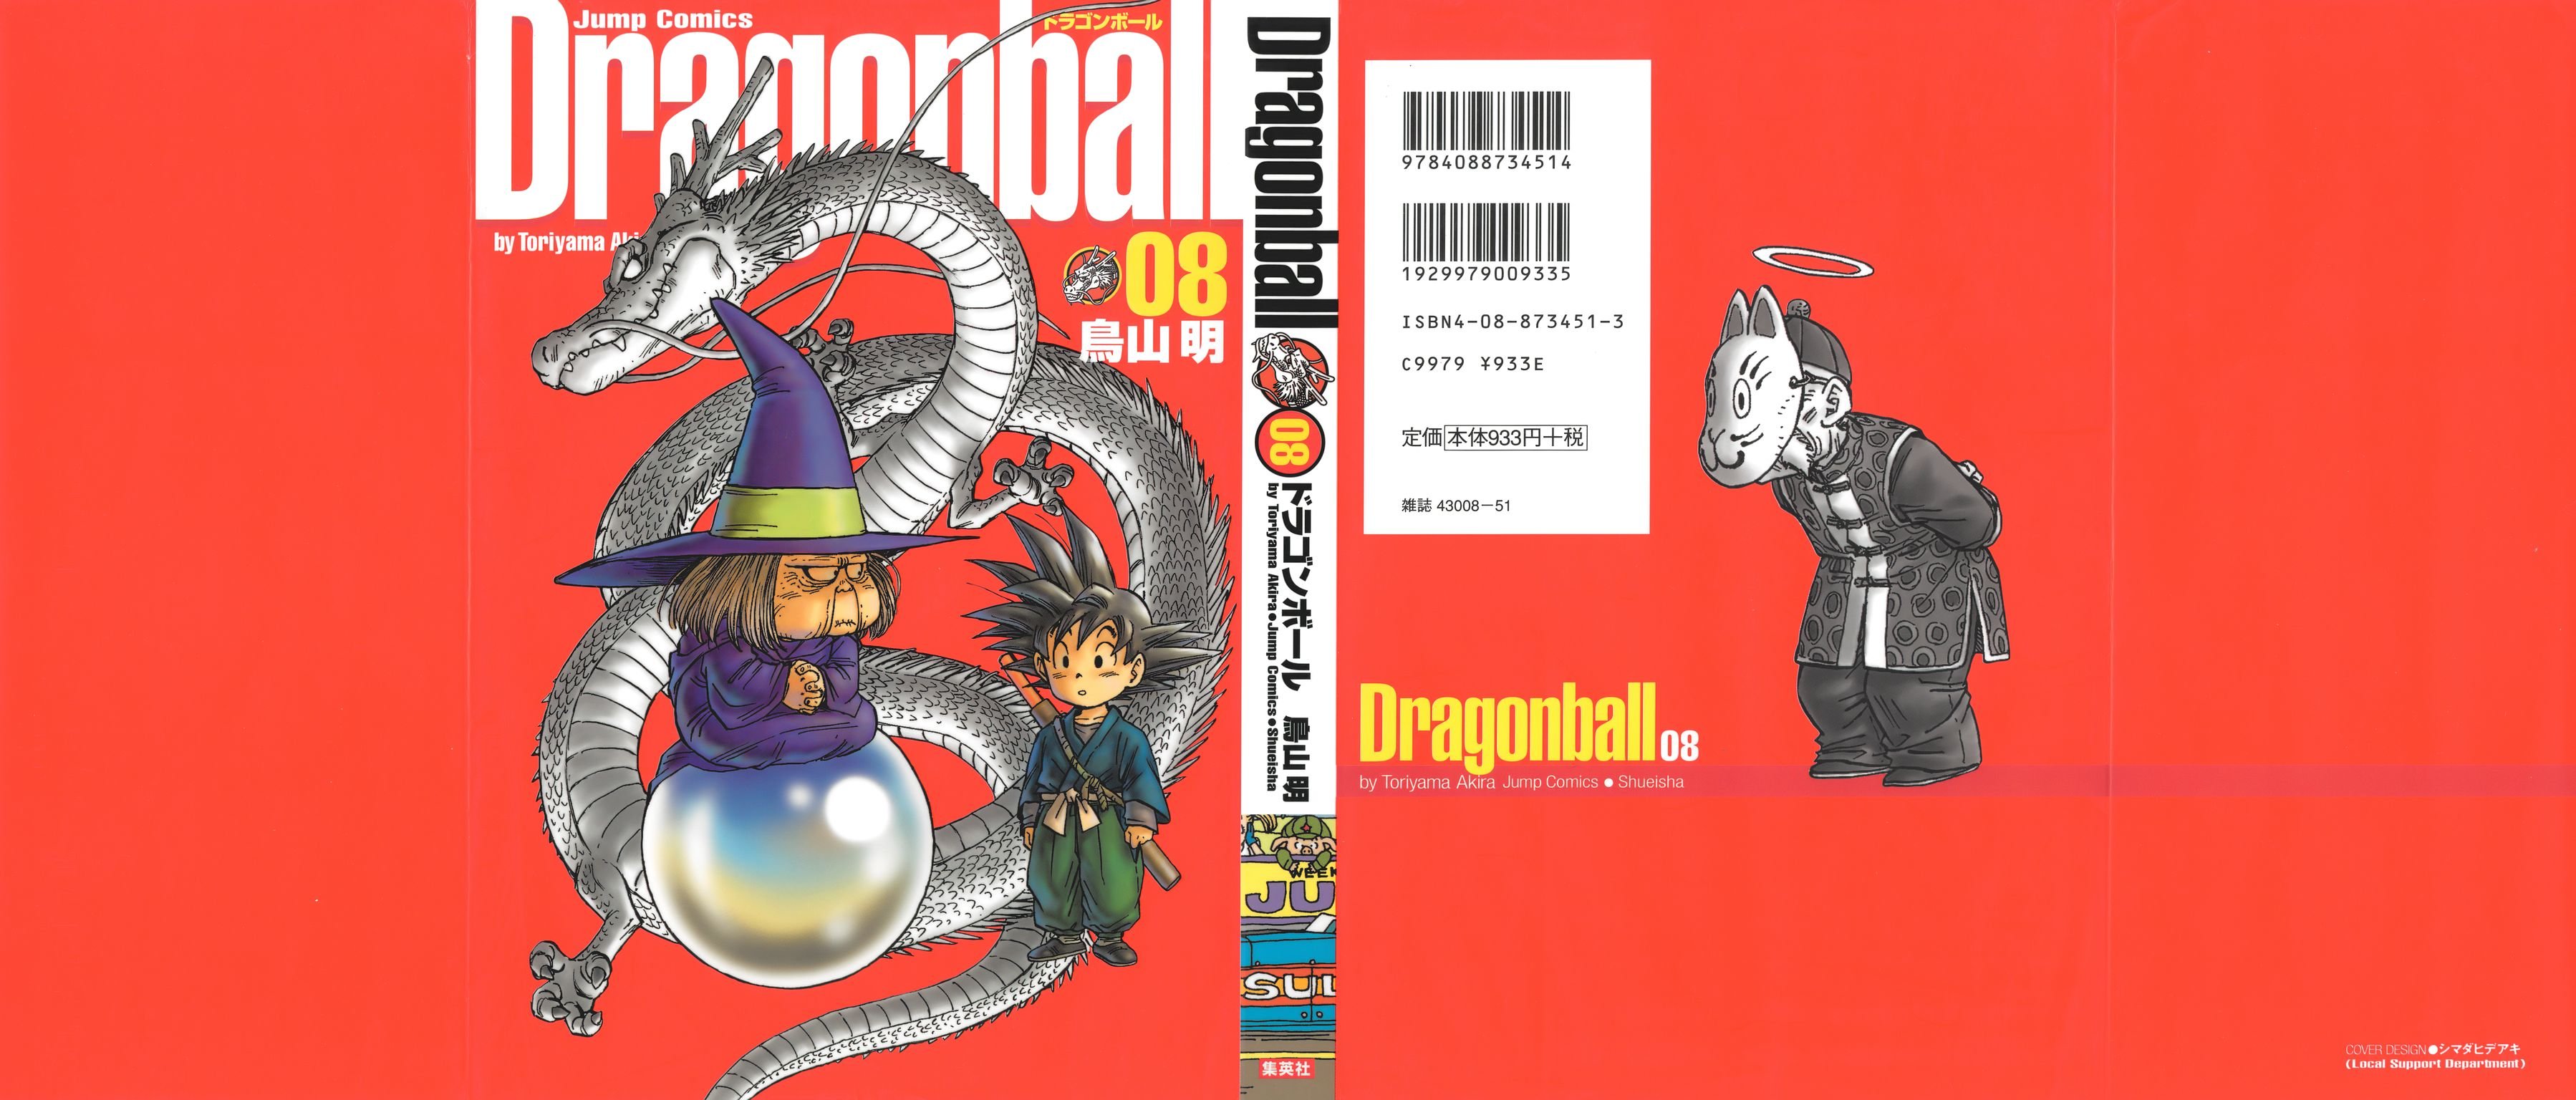 dragonballmangacover17.jpg